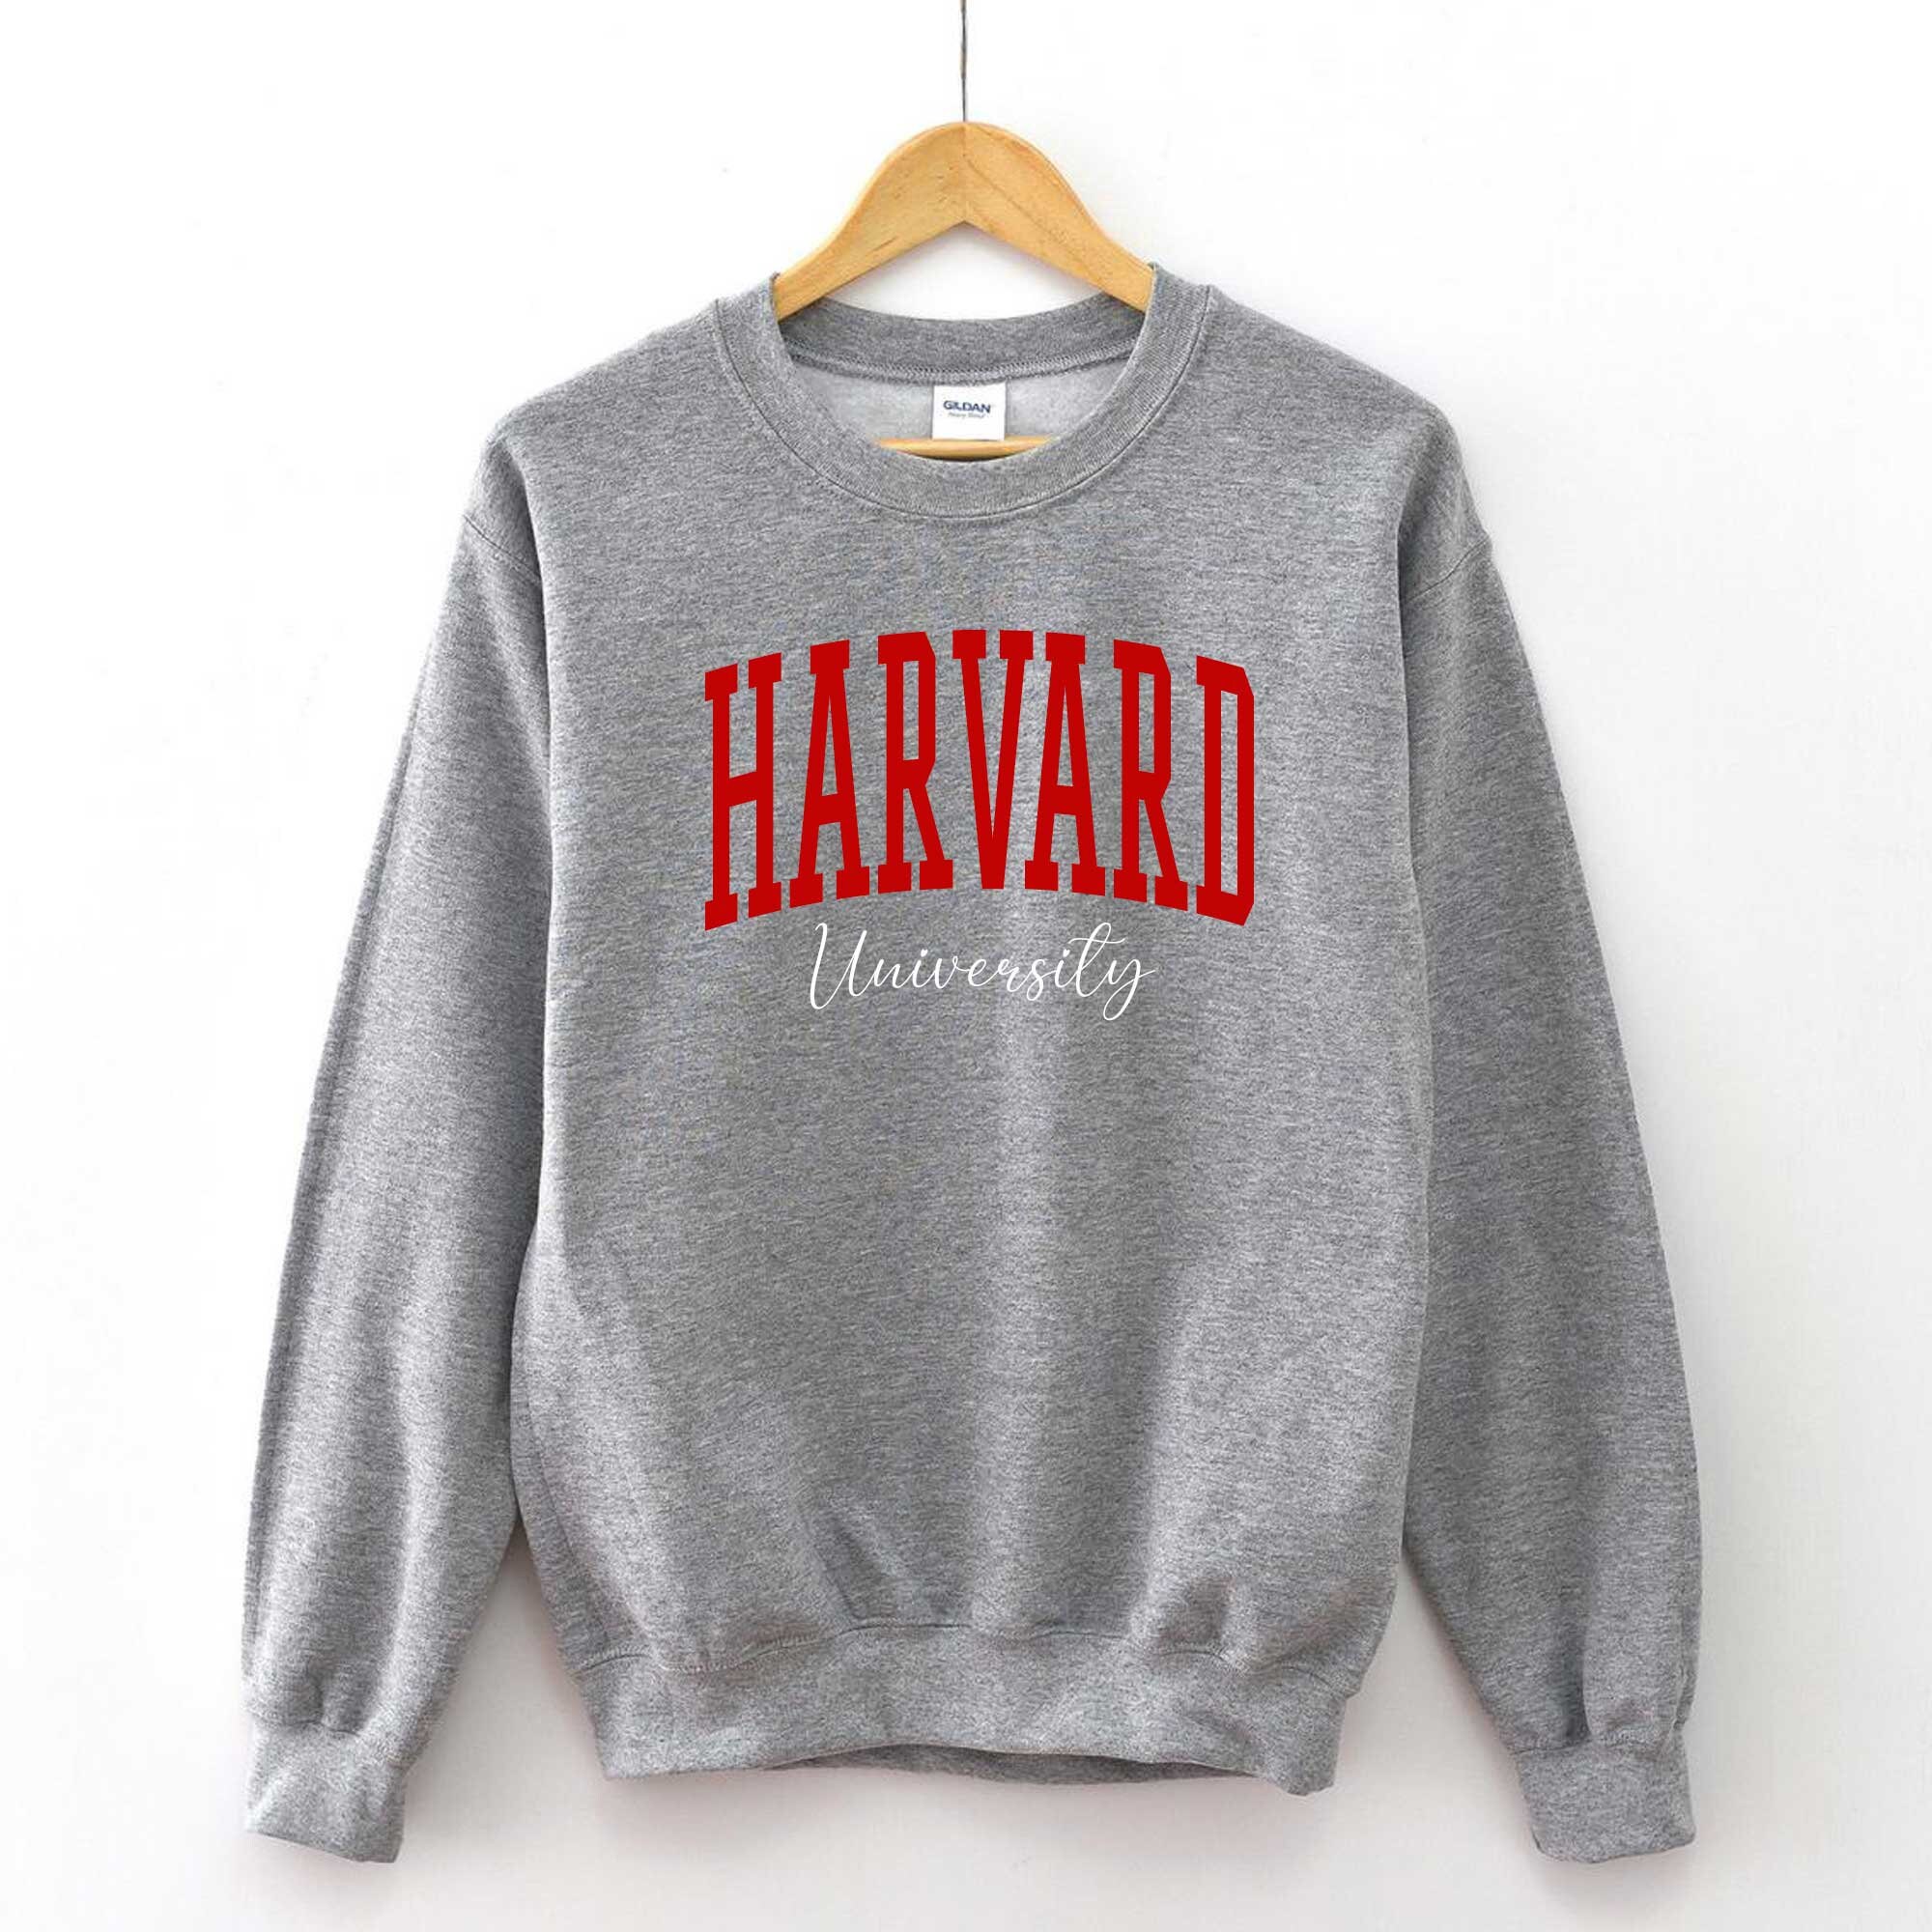 harvard graduate school of education sweatshirt